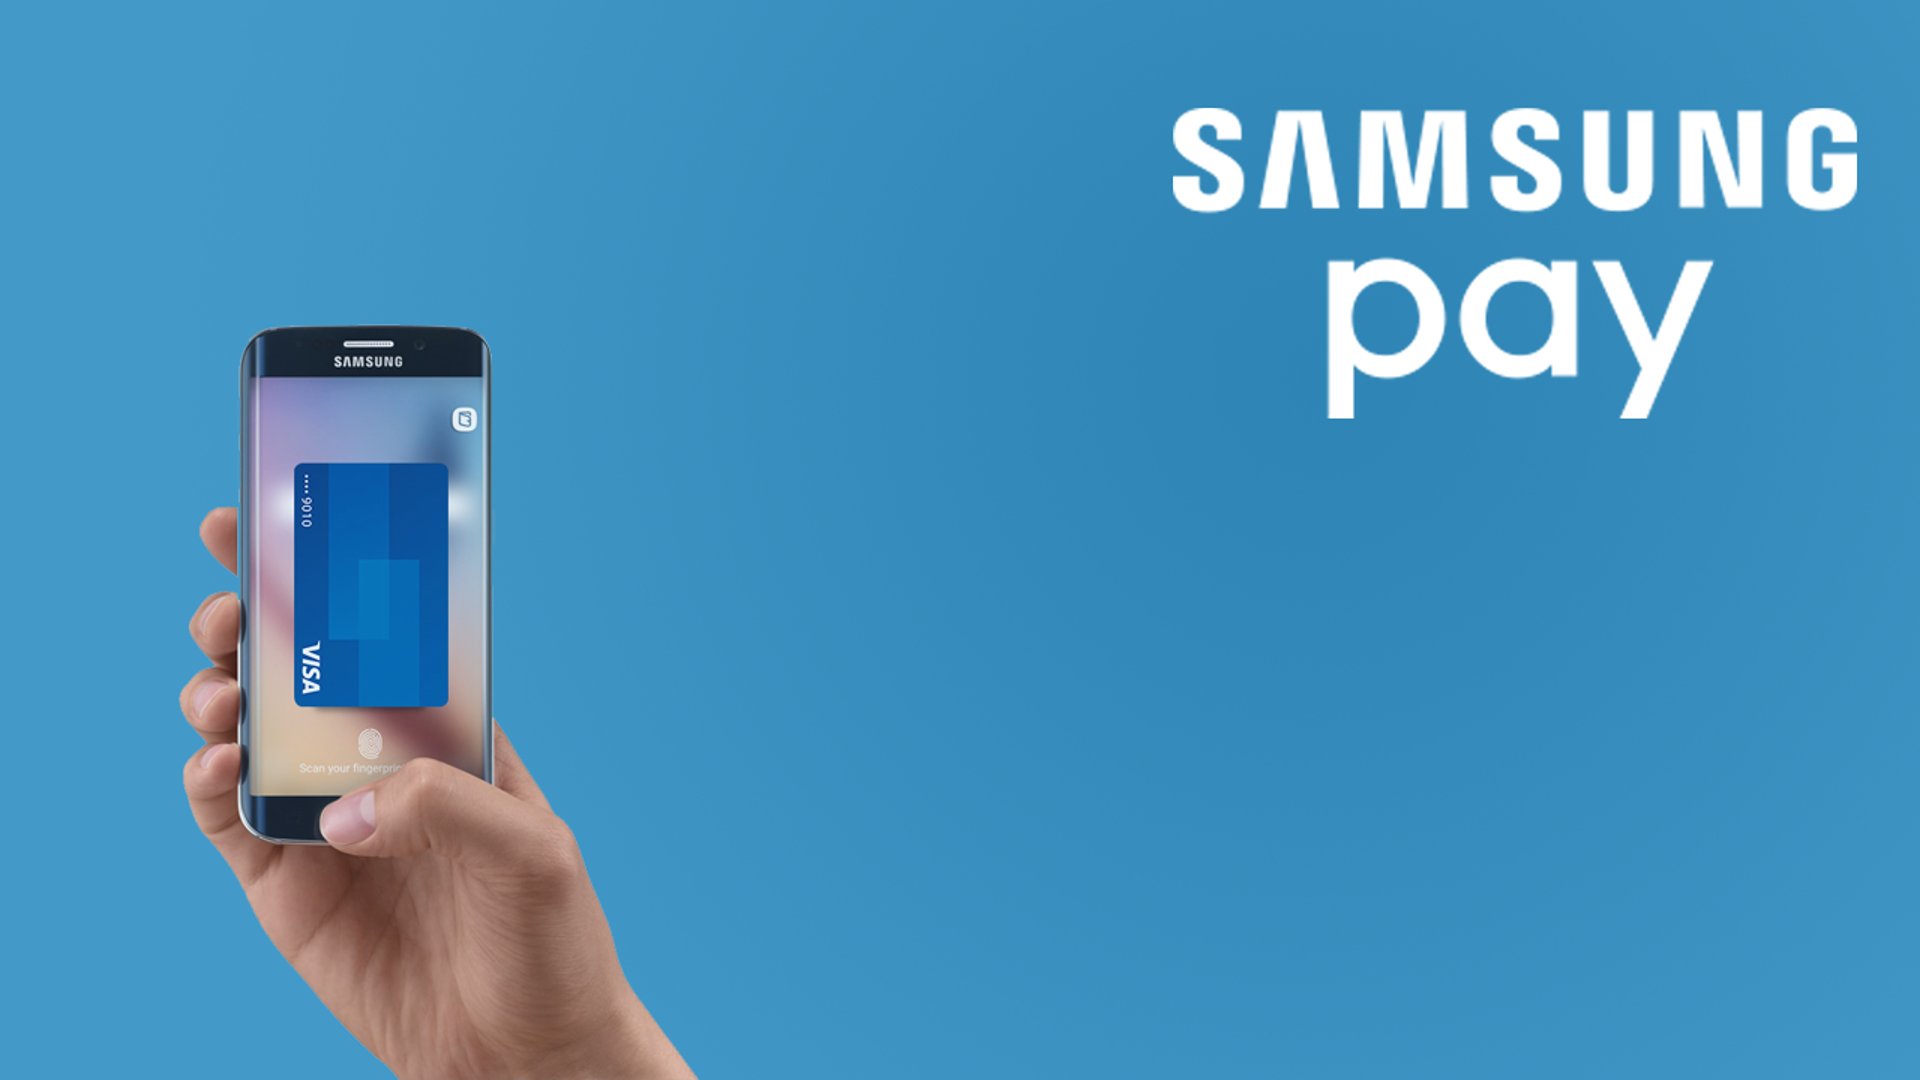 Samsung will release its debit card